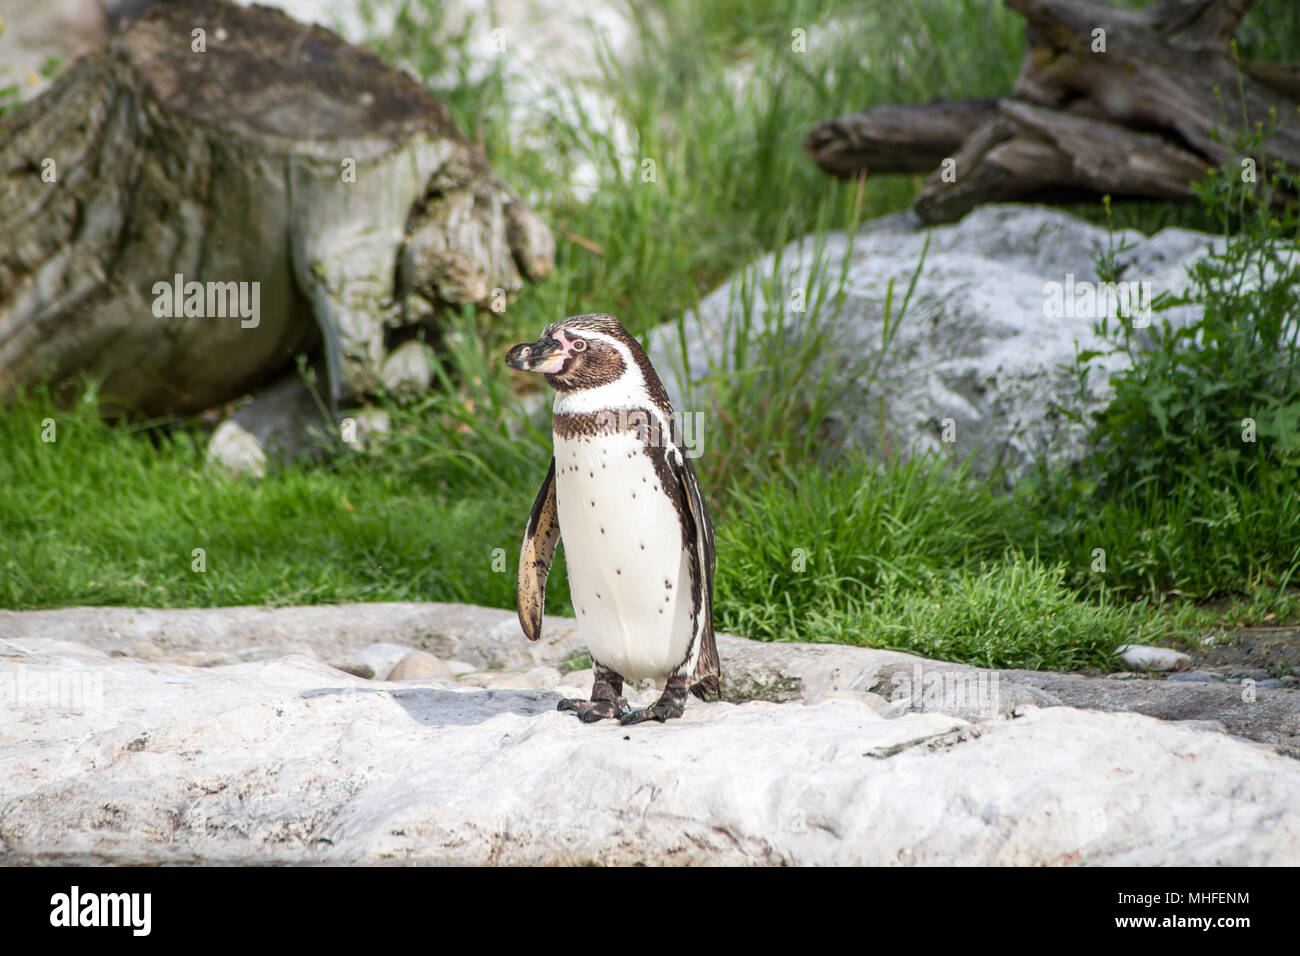 Blackfooted penguin (Spheniscus demersus) in einem Zoo Stockfoto